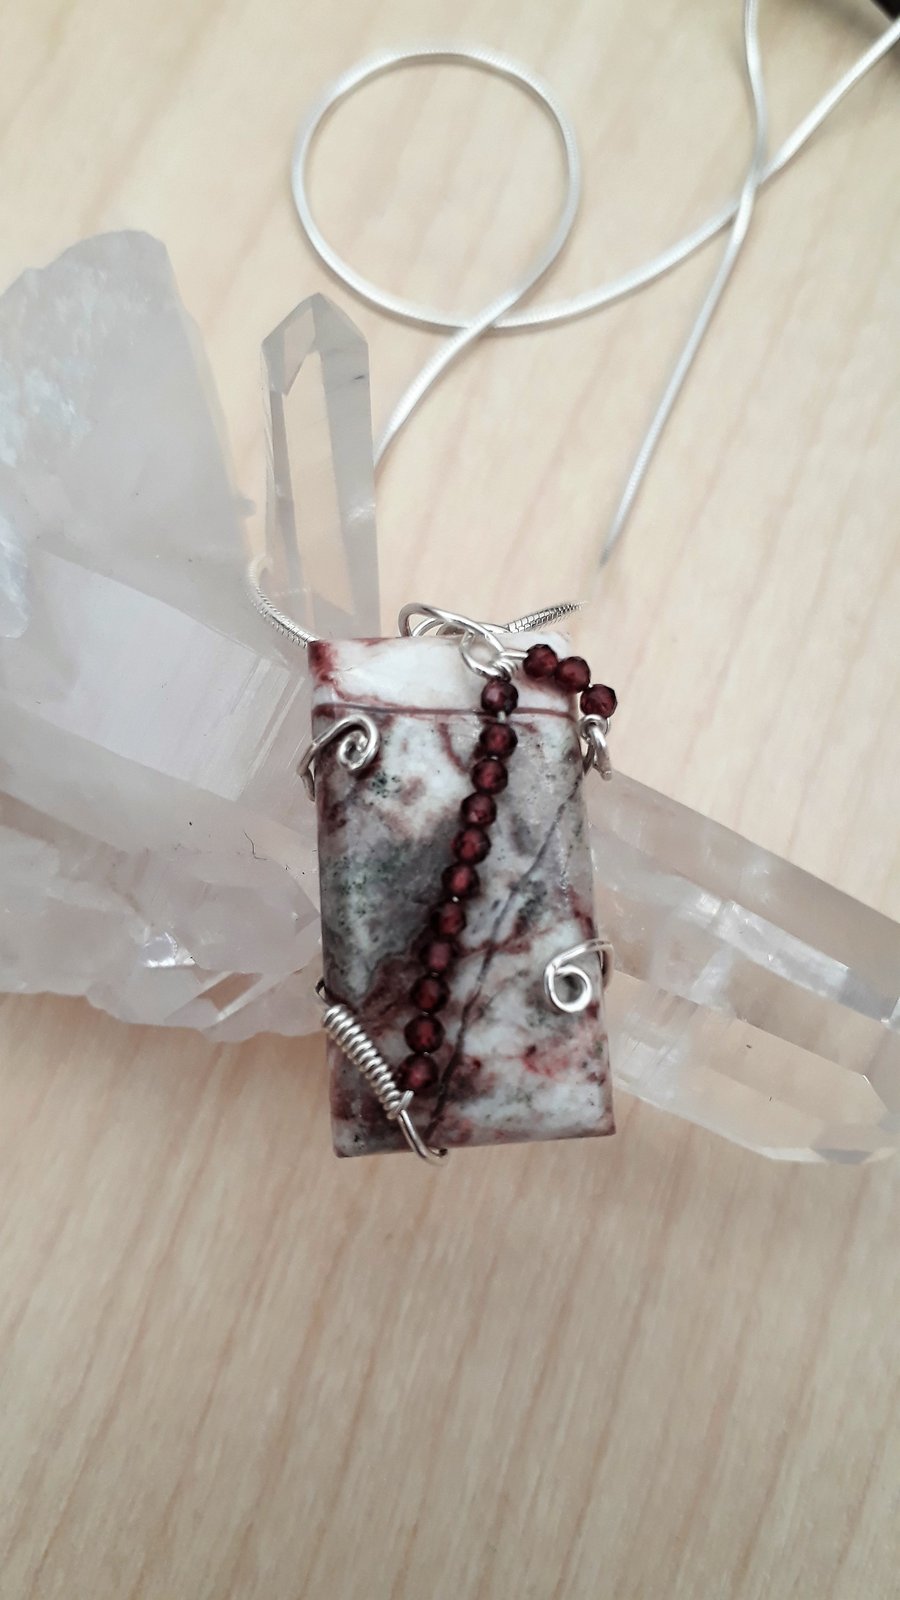 Ocean Jasper Pendant Wire Wrapped in Sterling Silver with Garnets